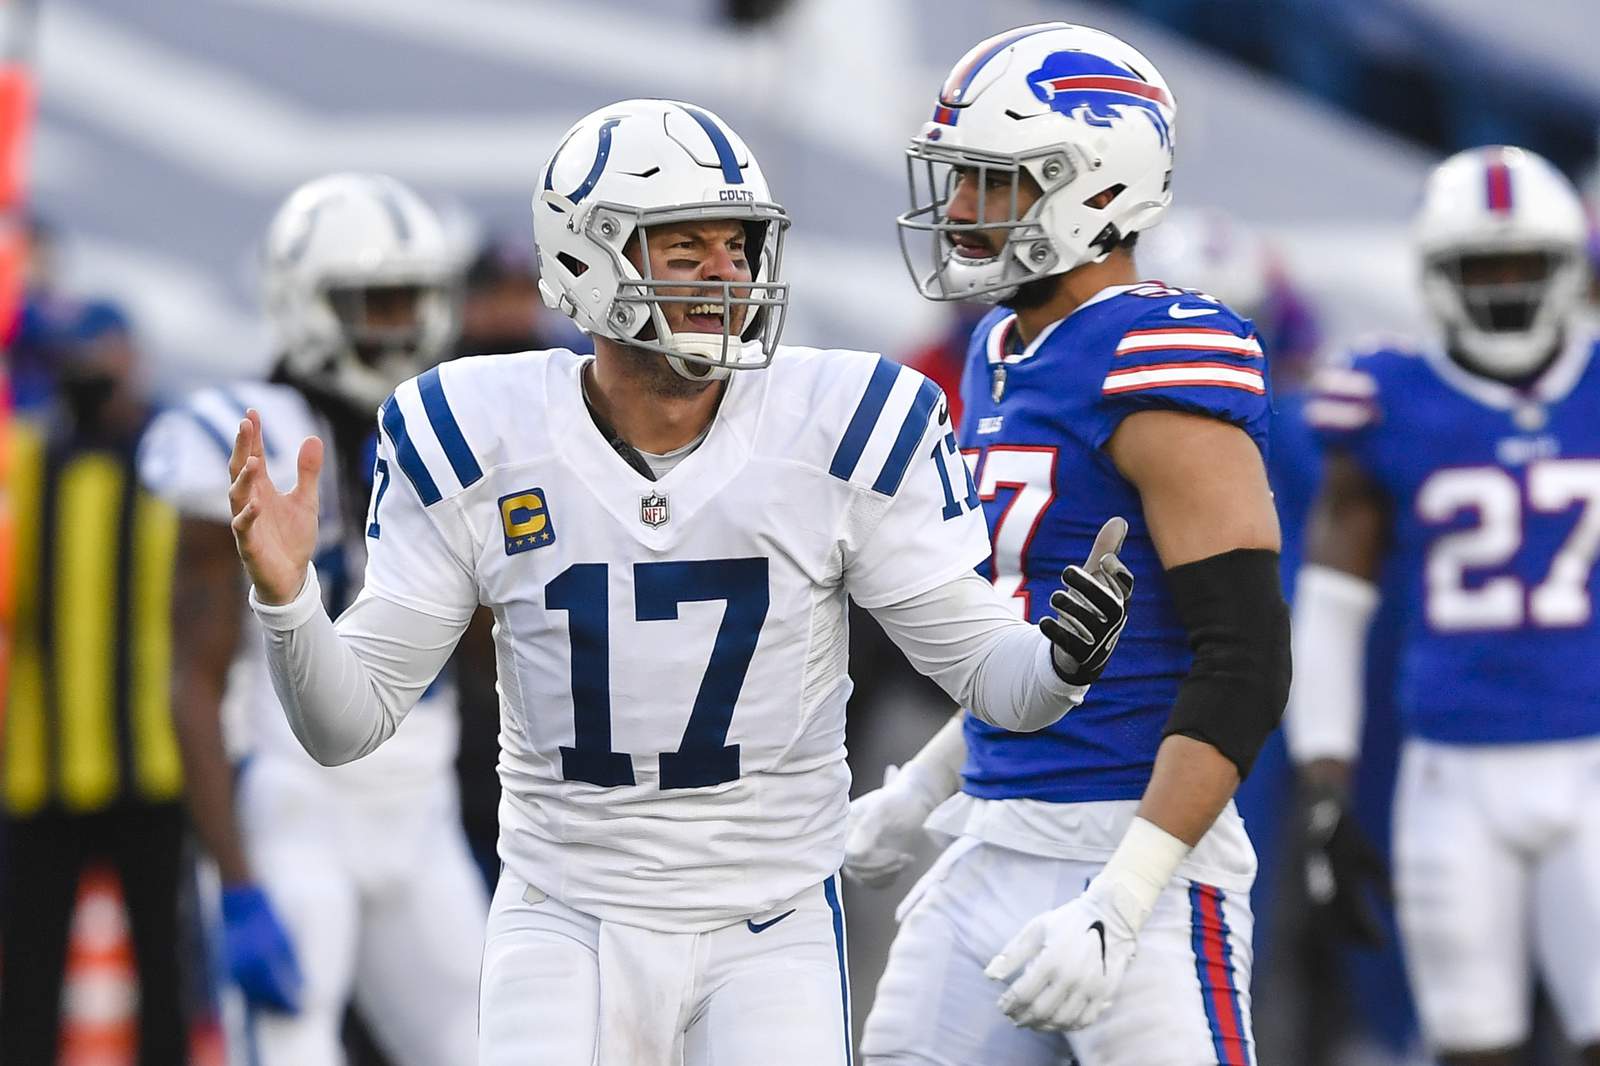 Colts' comeback bid falls short in 27-24 loss to Bills